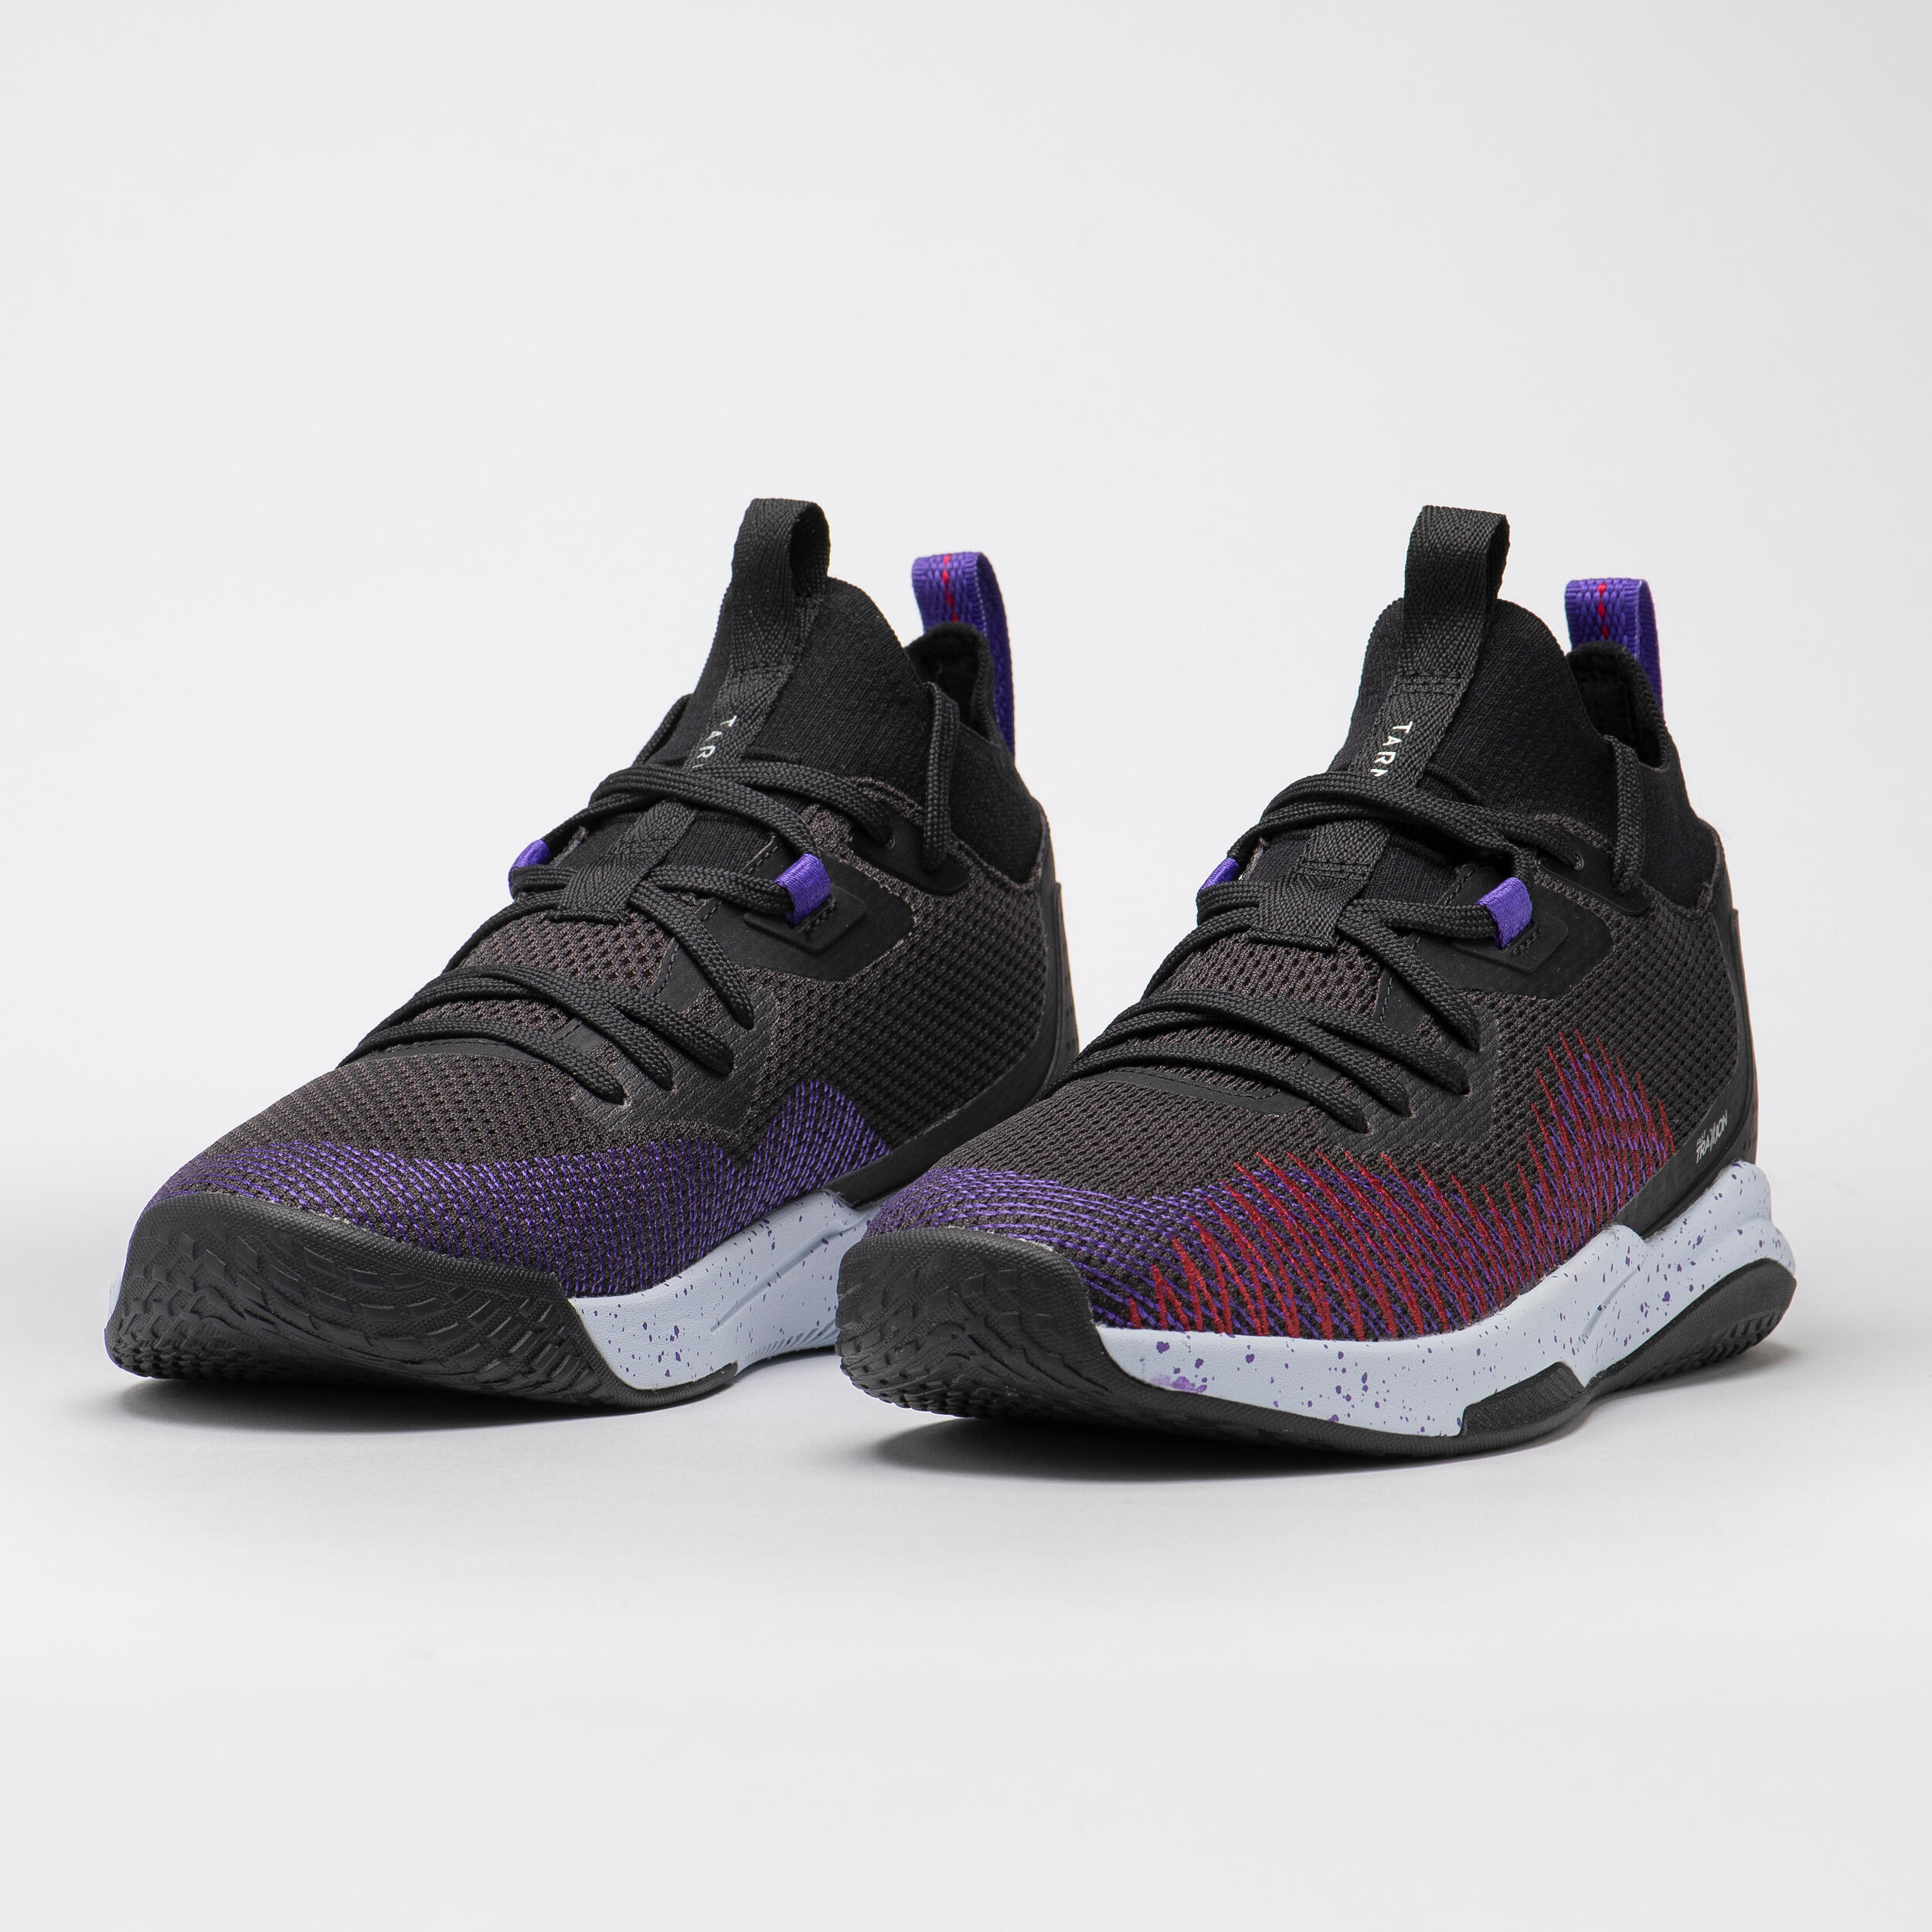 Women's Basketball Shoes Fast 500 - Black/Purple 2/8